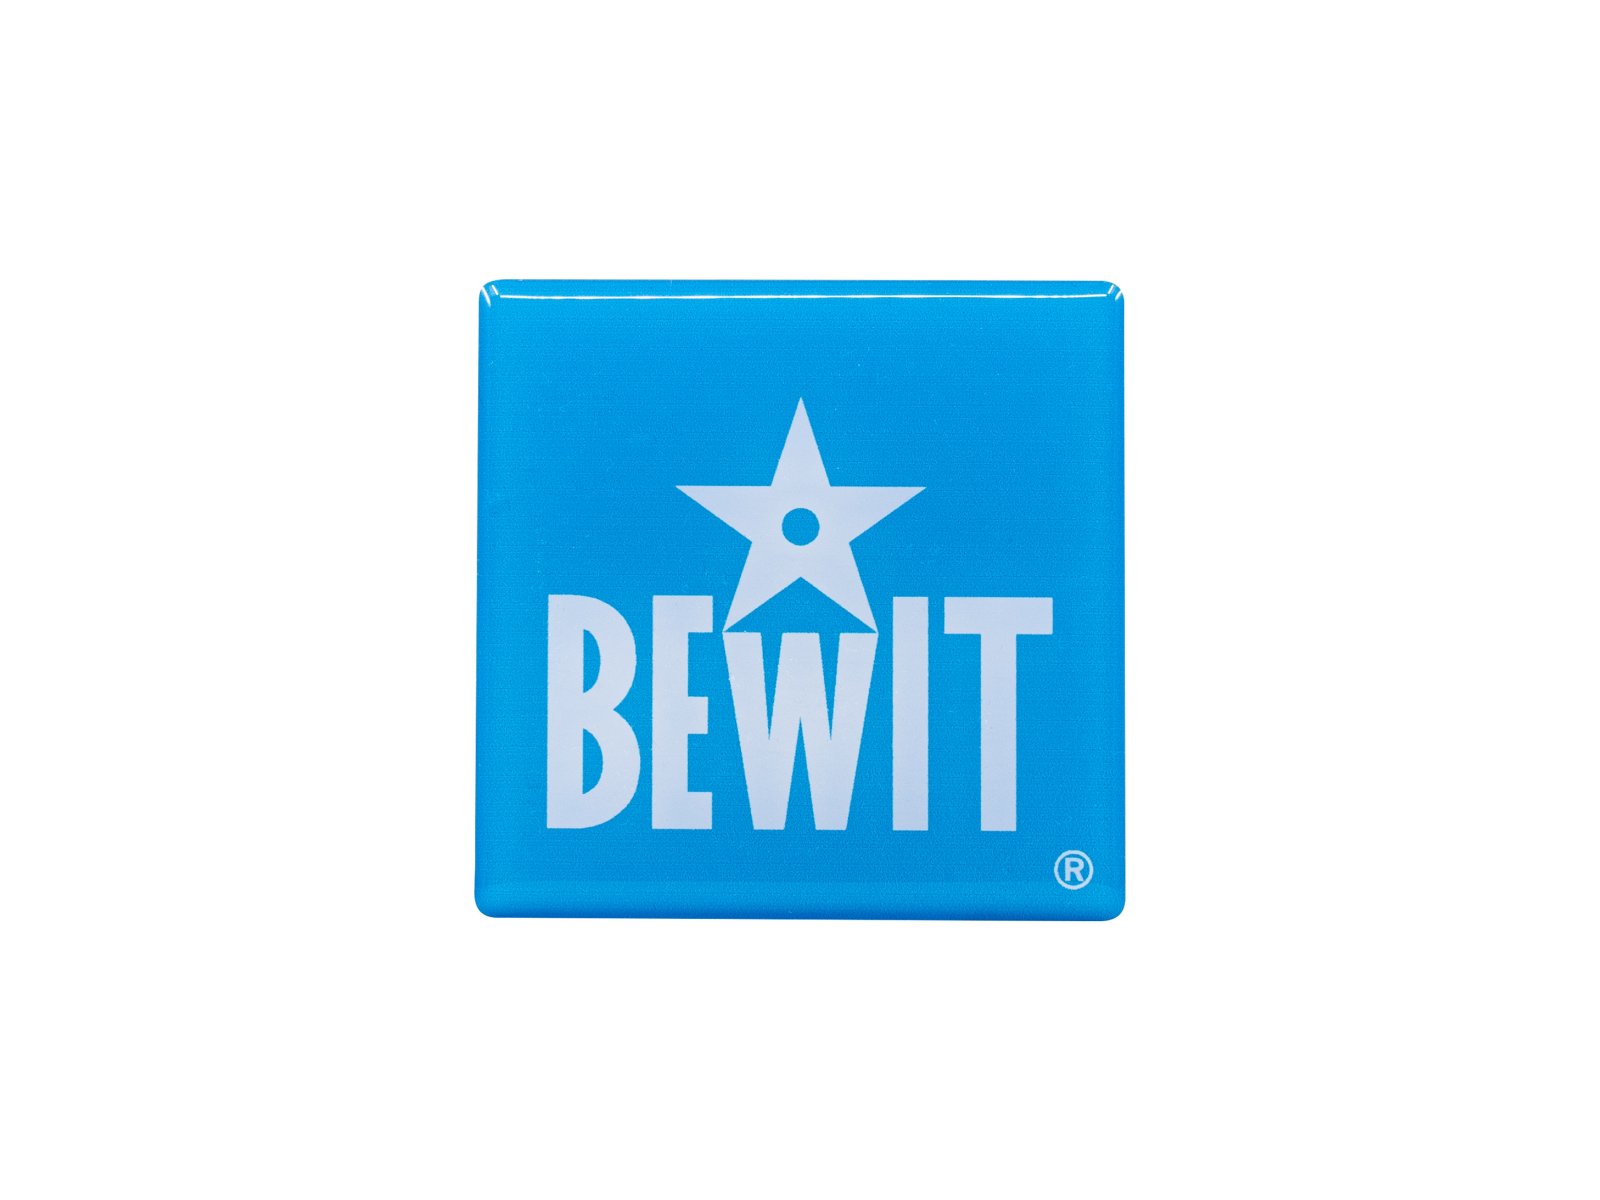 BEWIT 3D Sticker - 